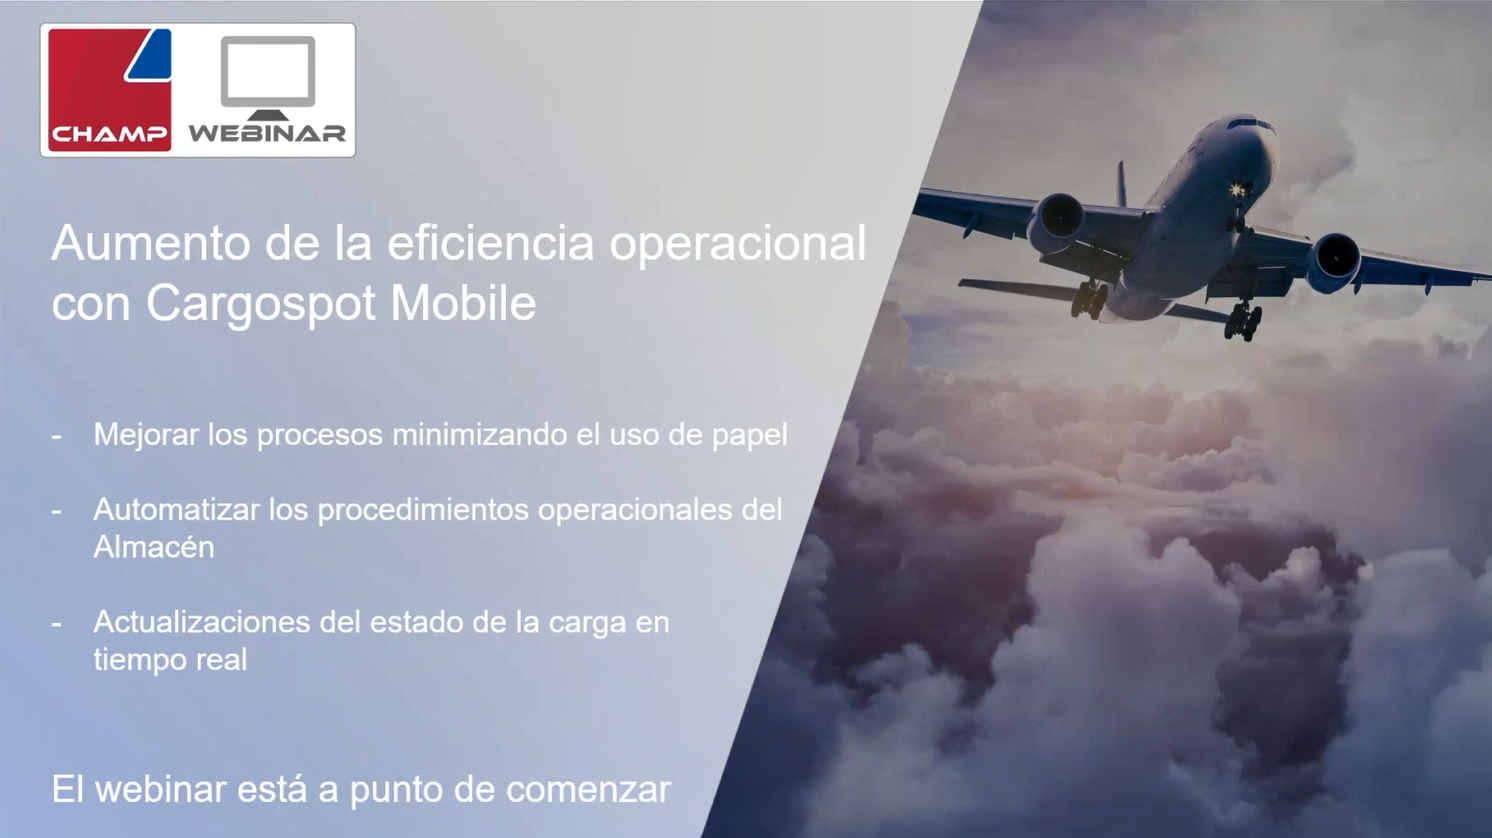 WEBINAR Cargospot Mobile and CHAMP Academy (Spanish)